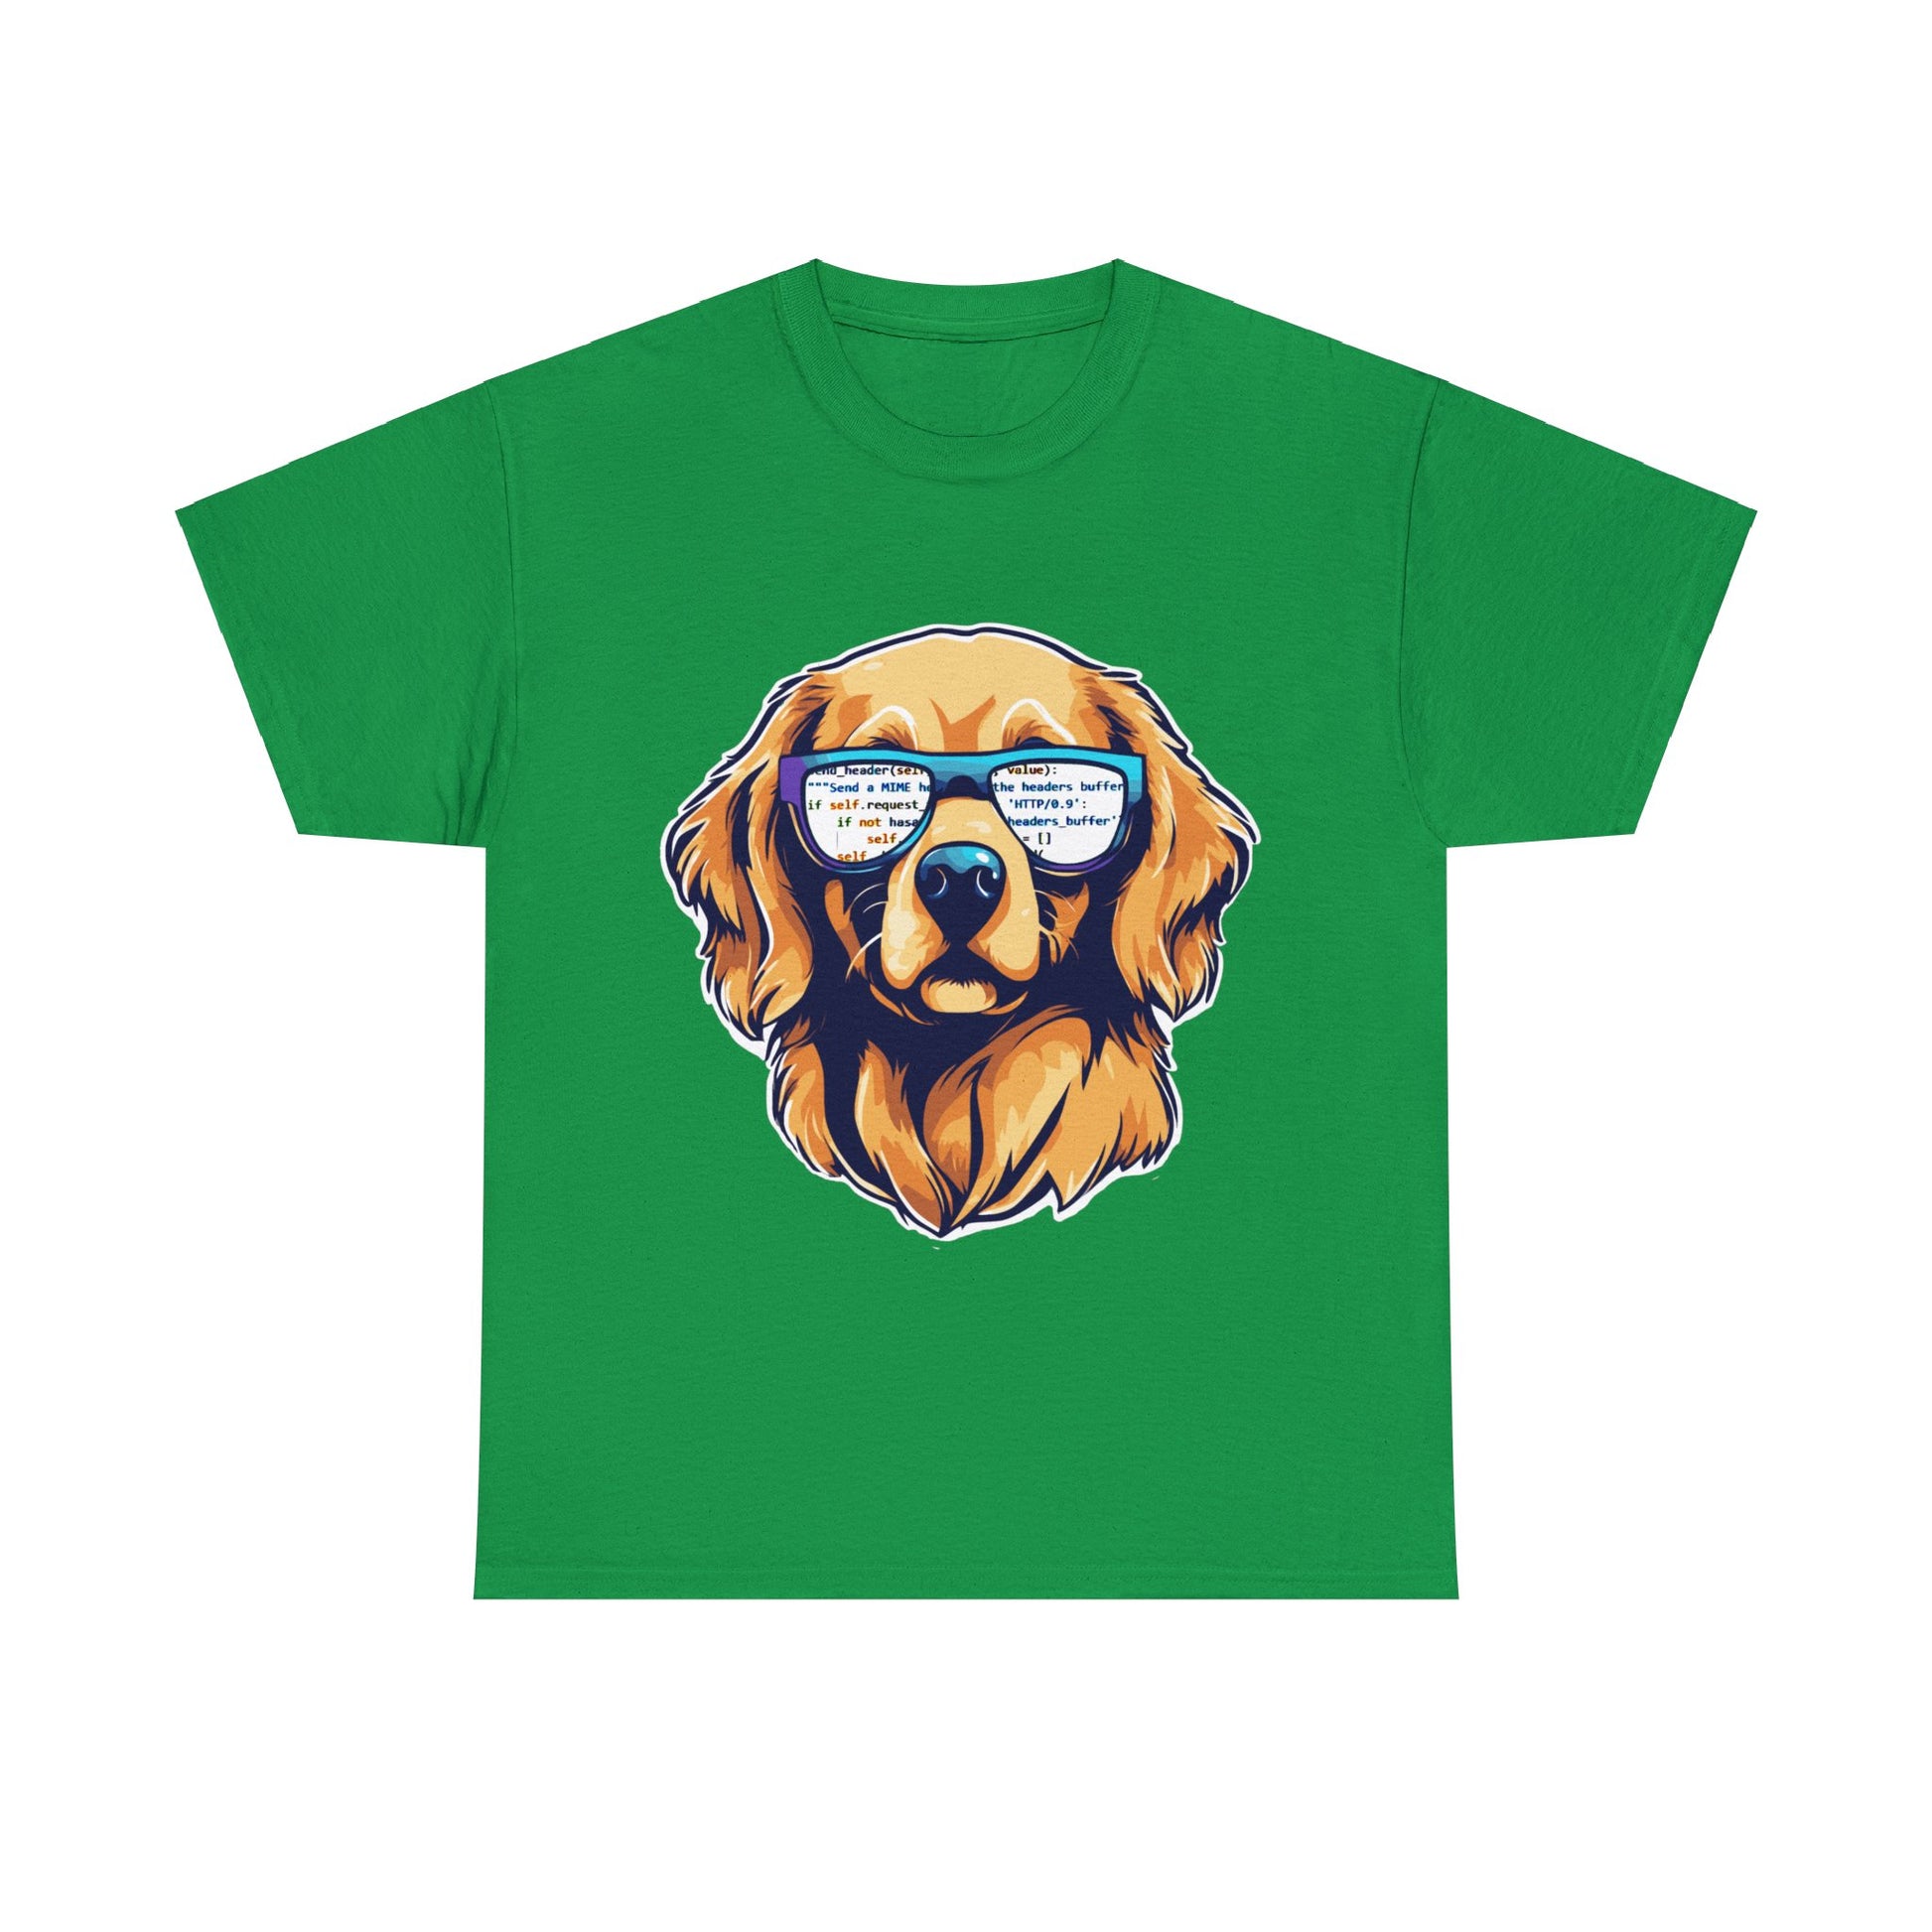 programming love showcased on a dog-themed shirt